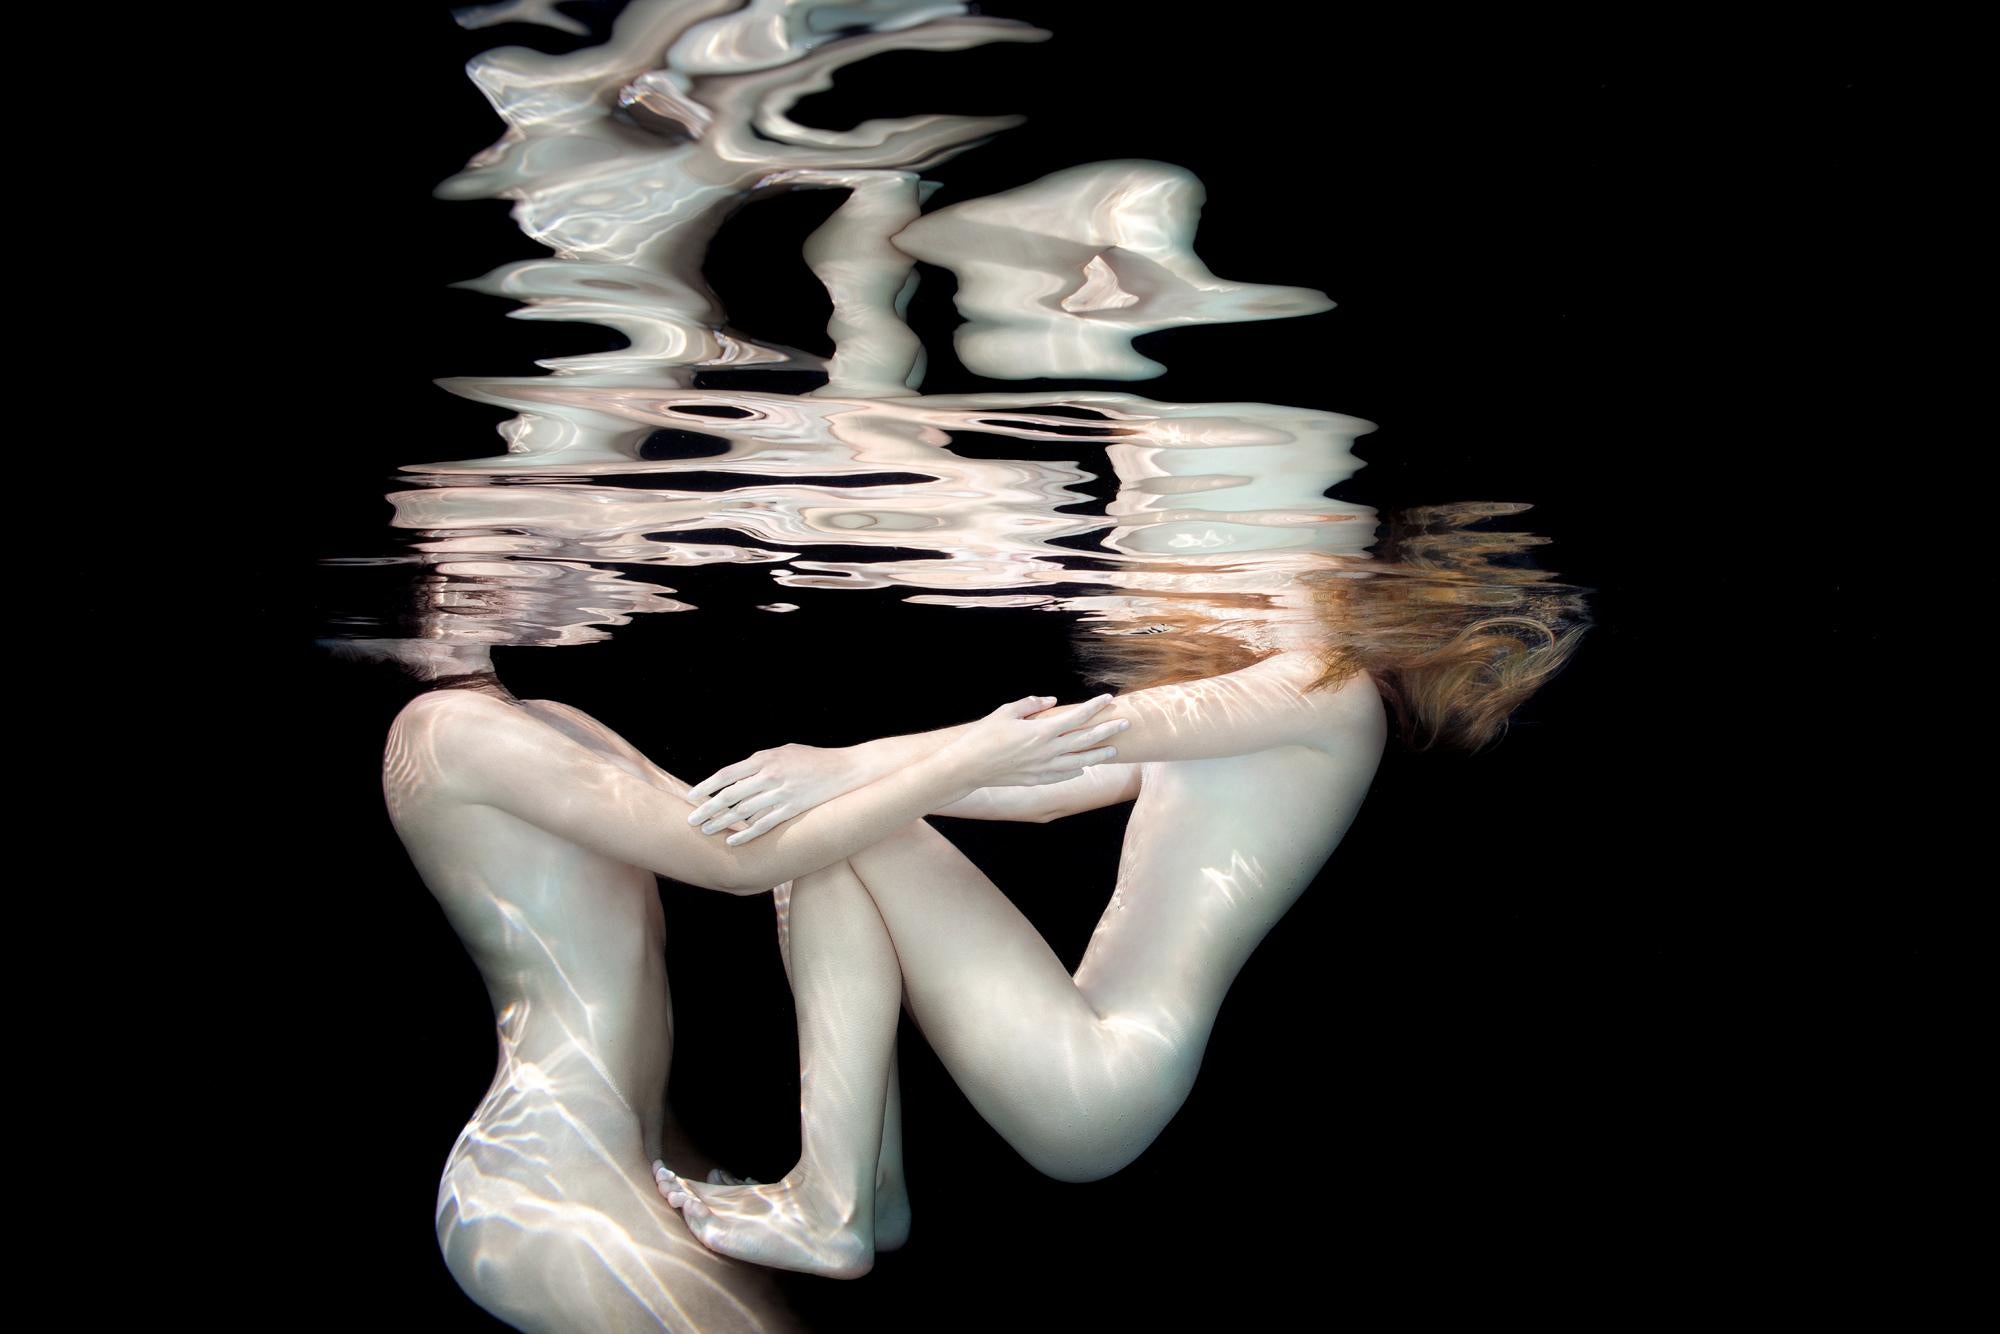 Alex Sher Nude Photograph - Porcelain - underwater nude photo - print on aluminum 8 x 12"